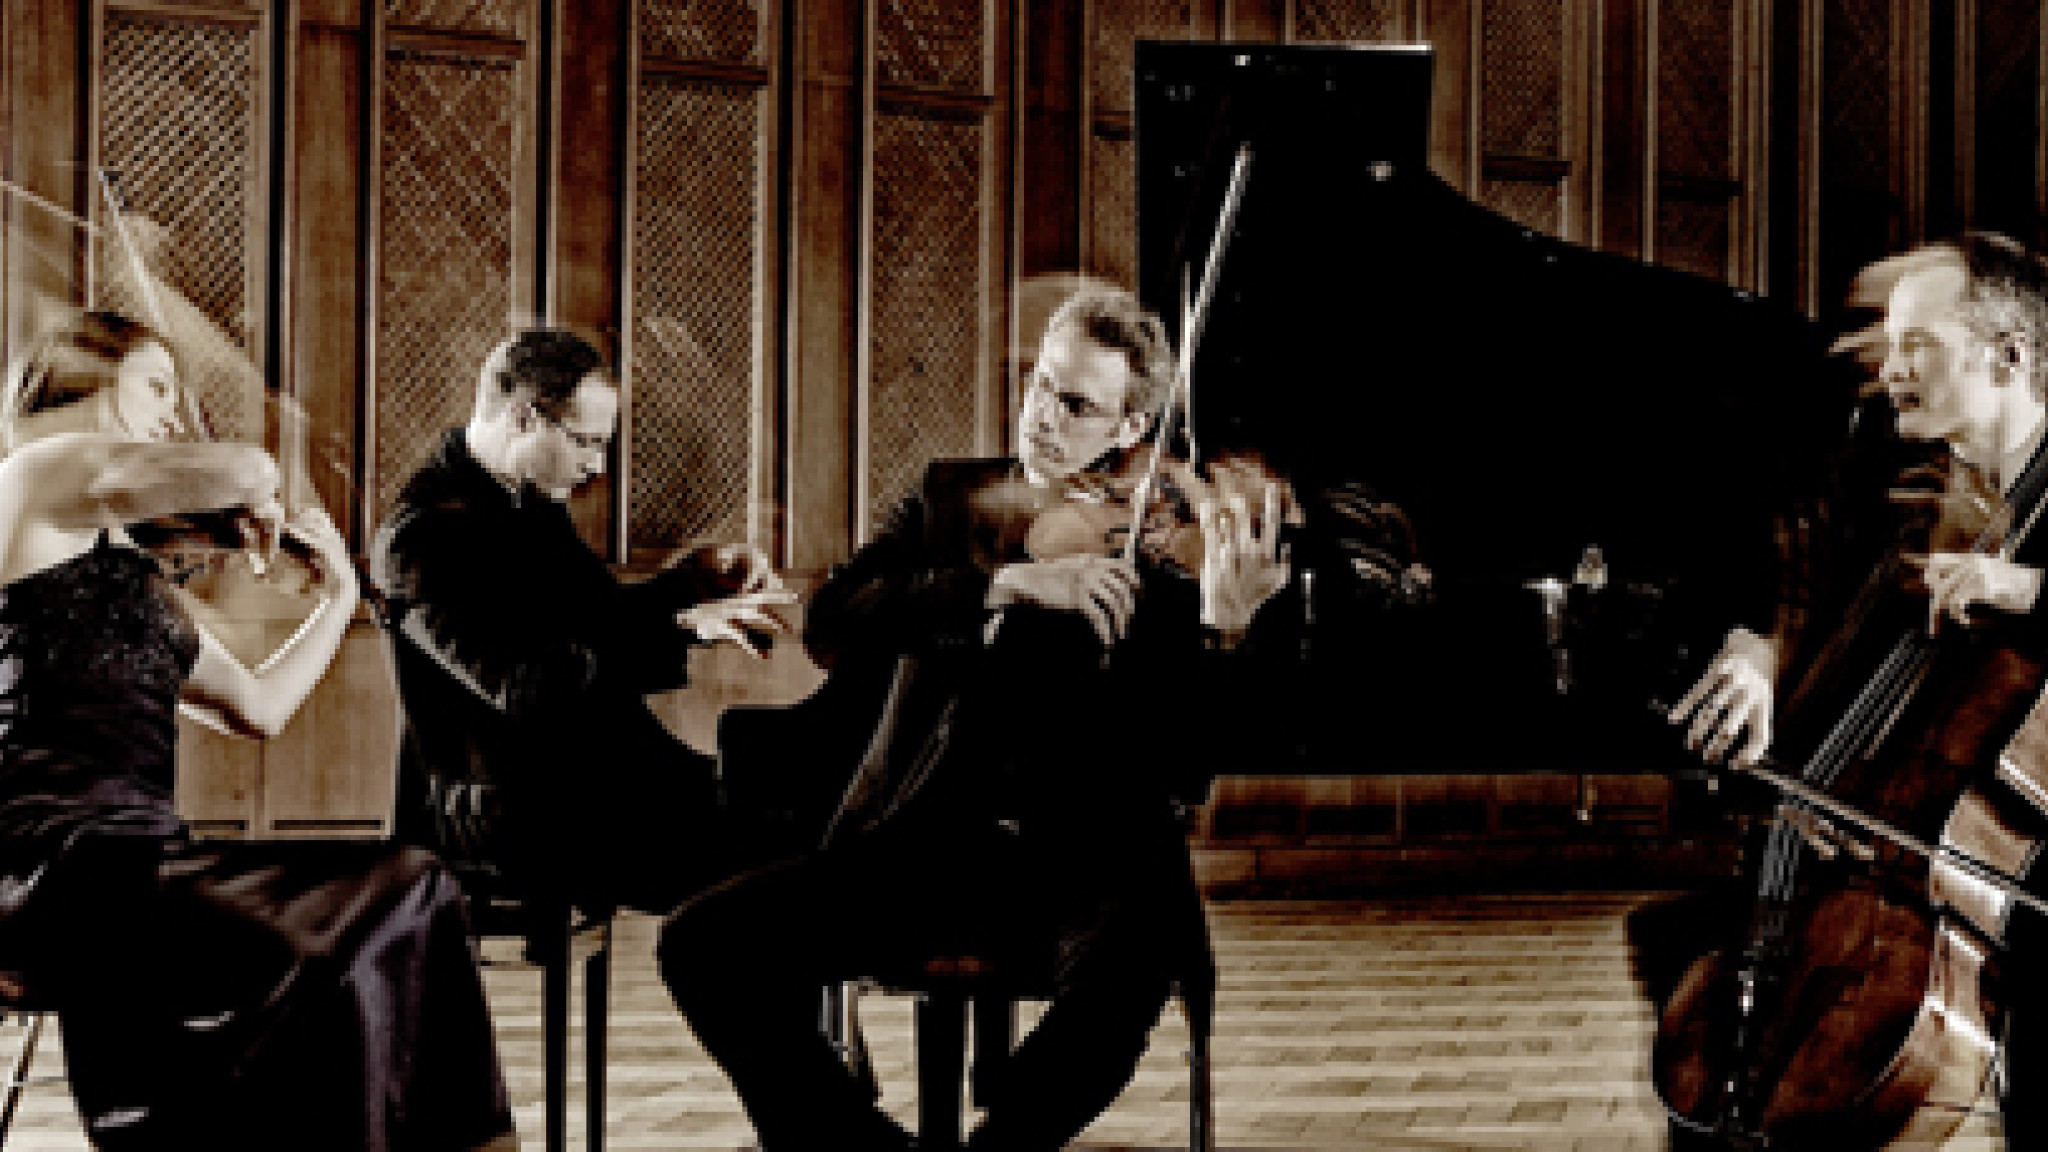 Fauré Quartett playing